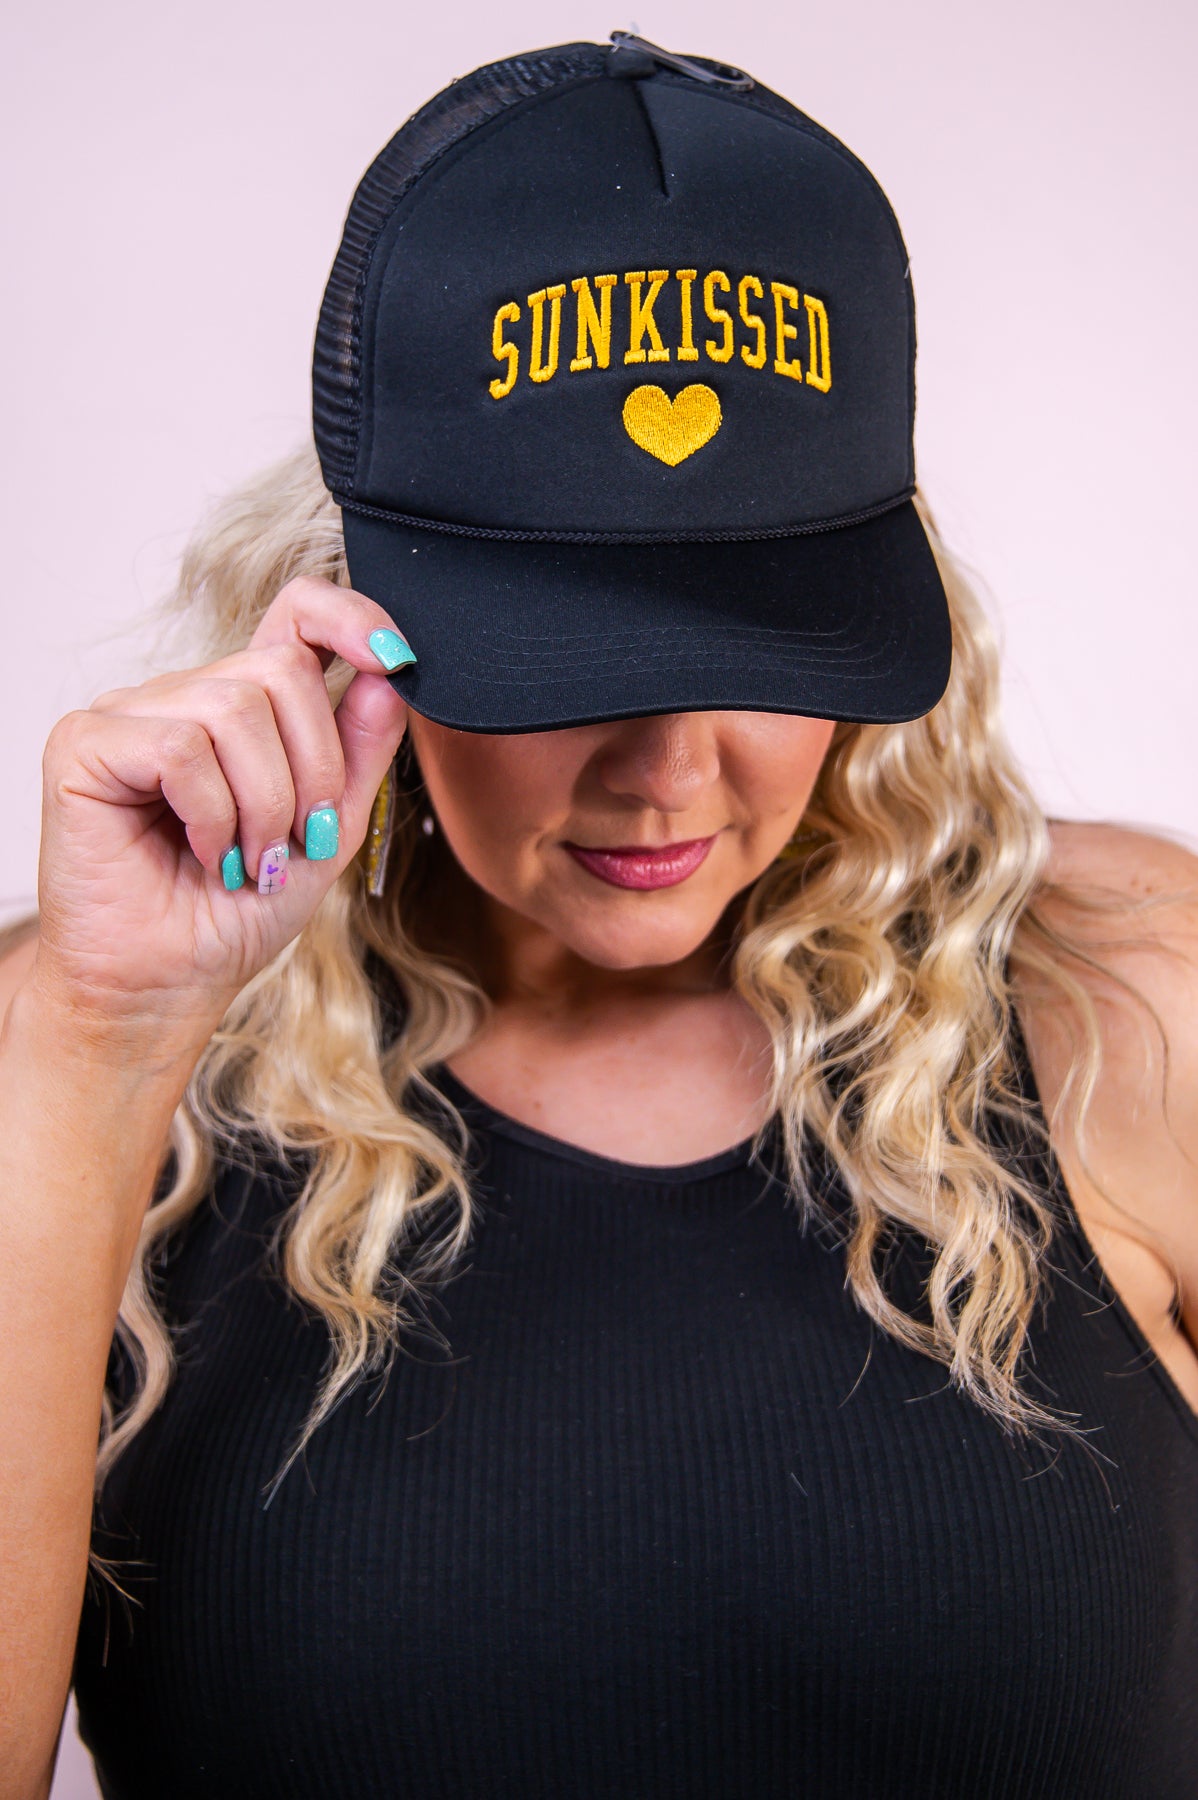 Sunkissed Black/Mustard Foam Trucker Hat - HAT1498BK